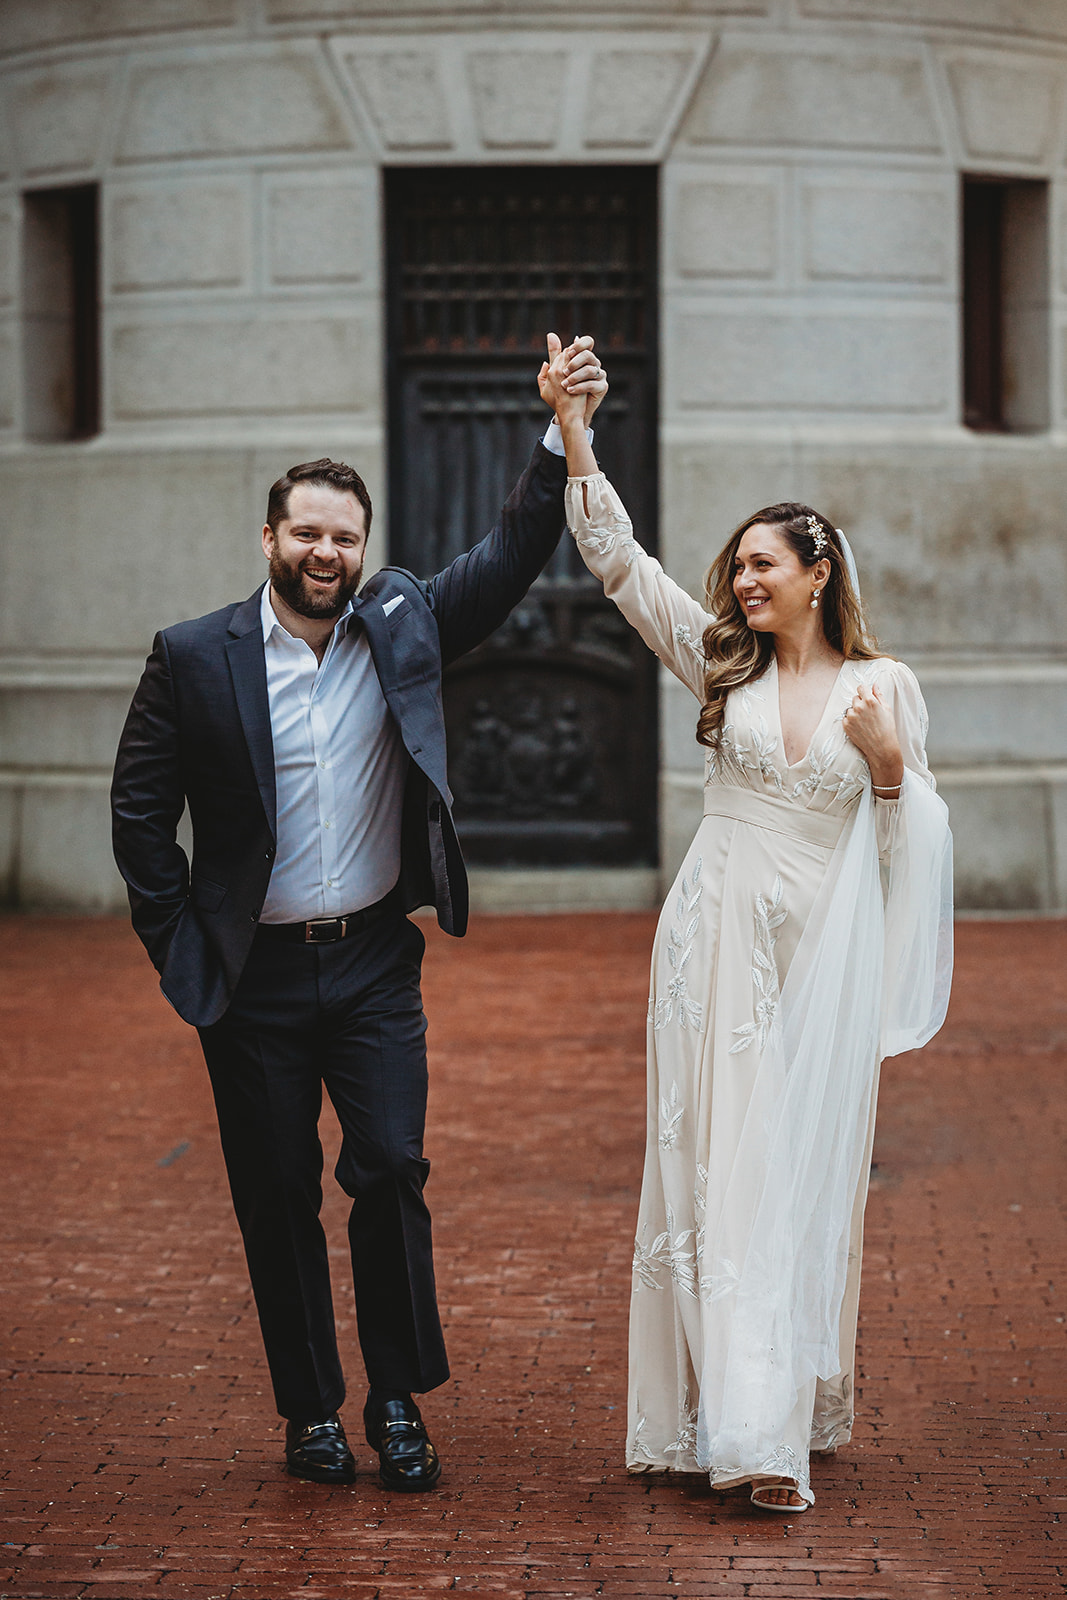 rainy intimate Philadelphia City Hall elopement wedding Pennsylvania fall outdoors classy fun